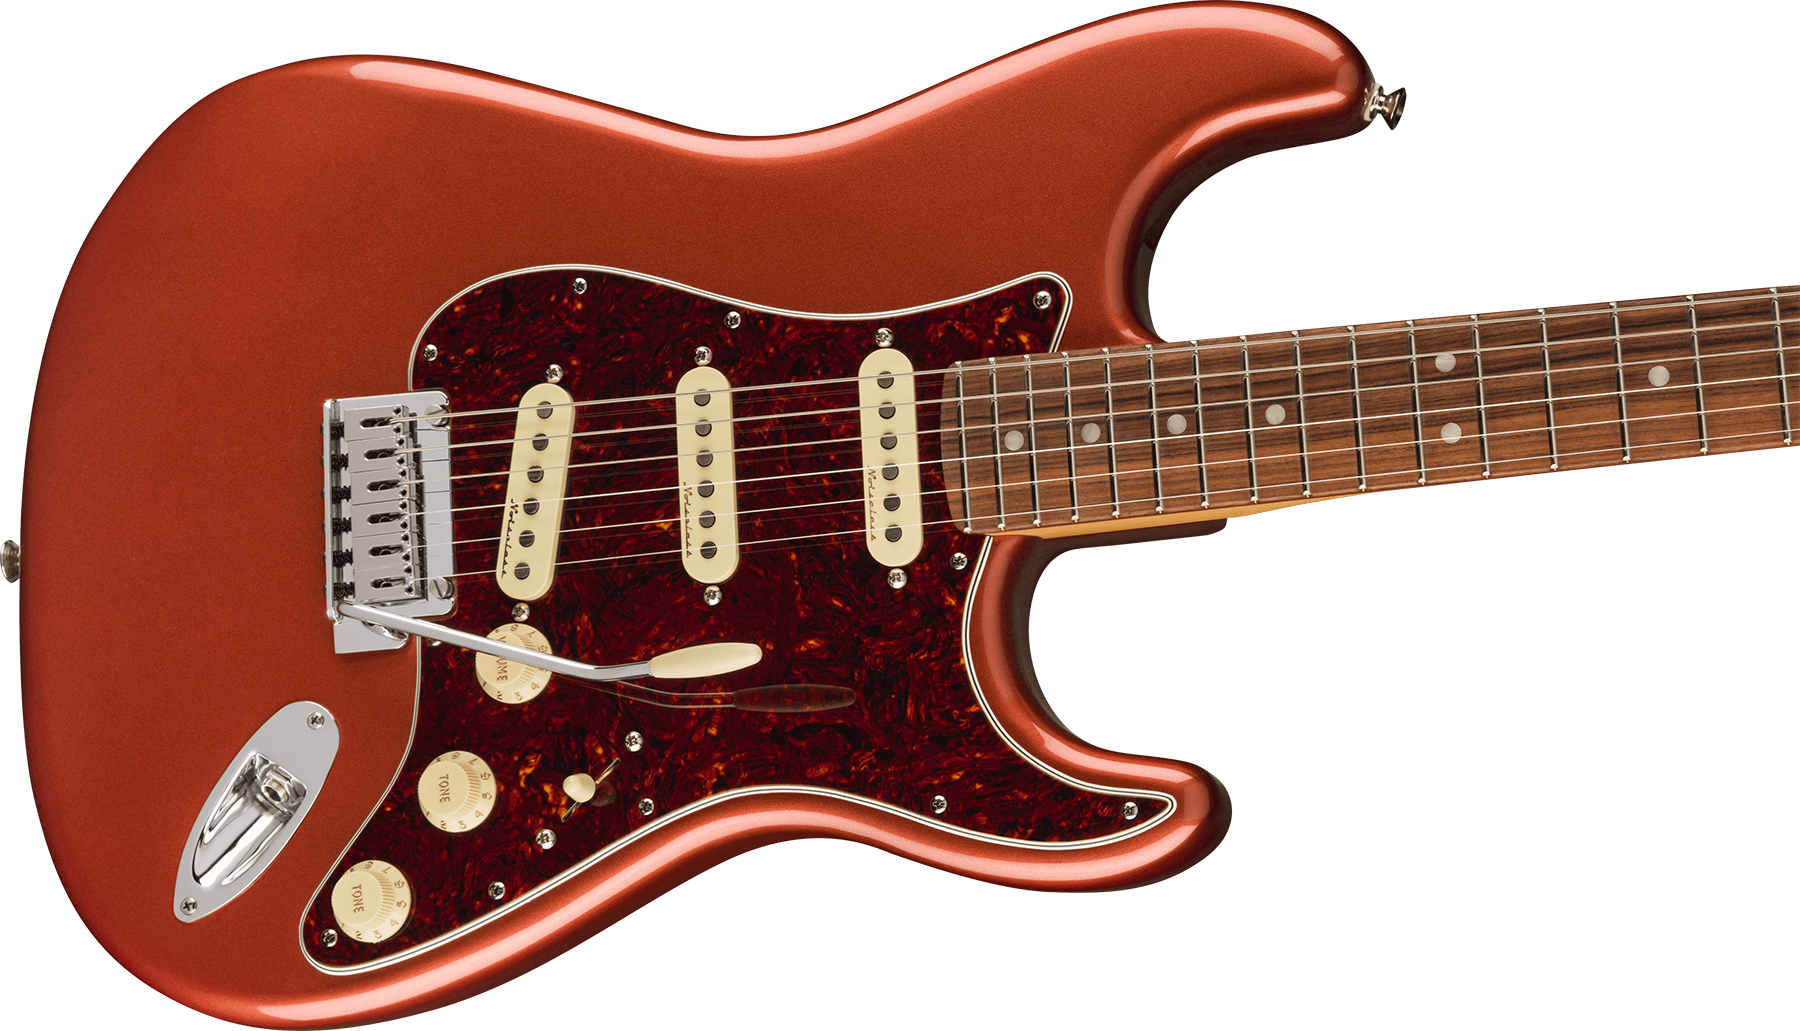 Fender Strat Player Plus Mex 3s Trem Pf - Aged Candy Apple Red - Guitarra eléctrica con forma de str. - Variation 2